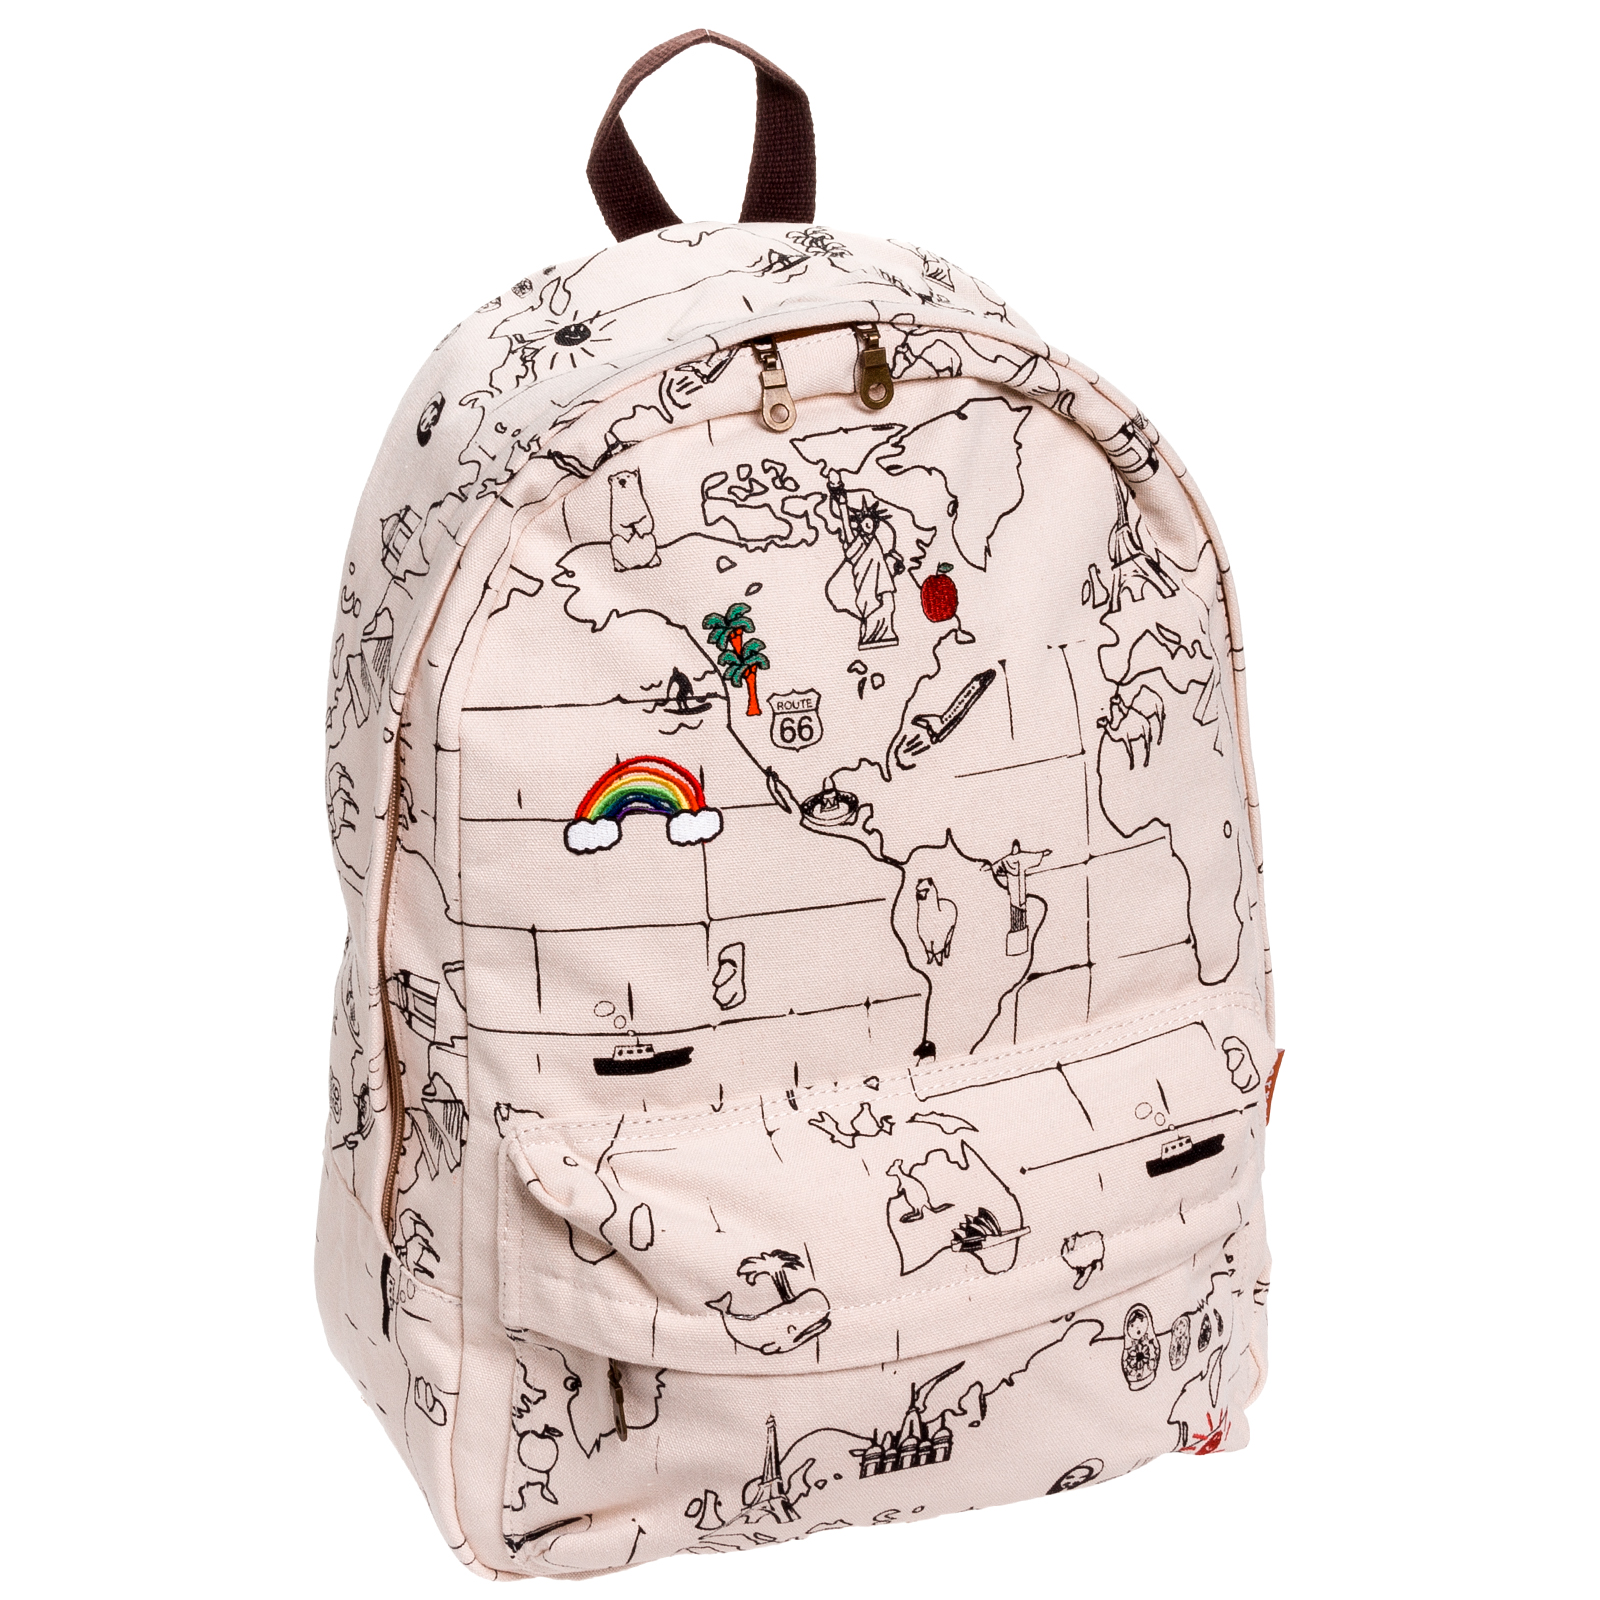 ... Map Print Canvas Backpack School Bookbag Book Bag (White) at Sears.com